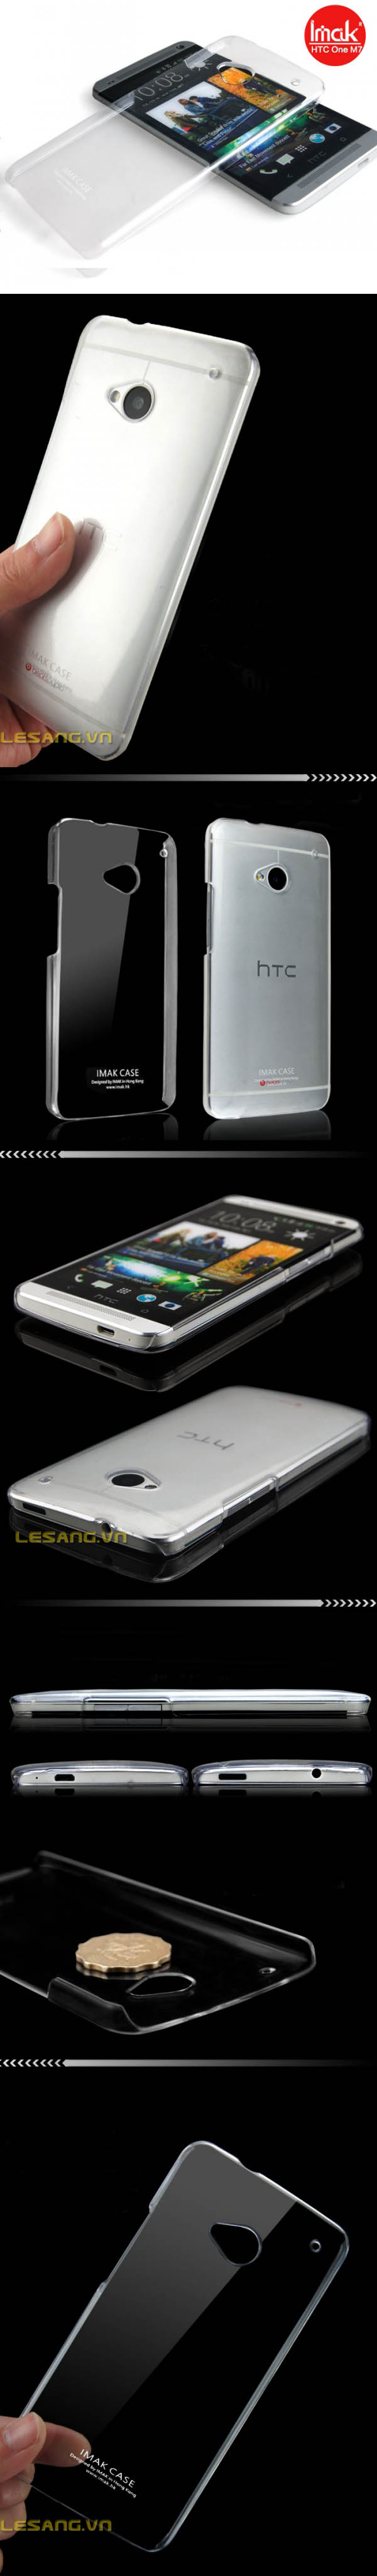 Ốp lưng HTC One 2 SIM 802w imak trong suốt - 4